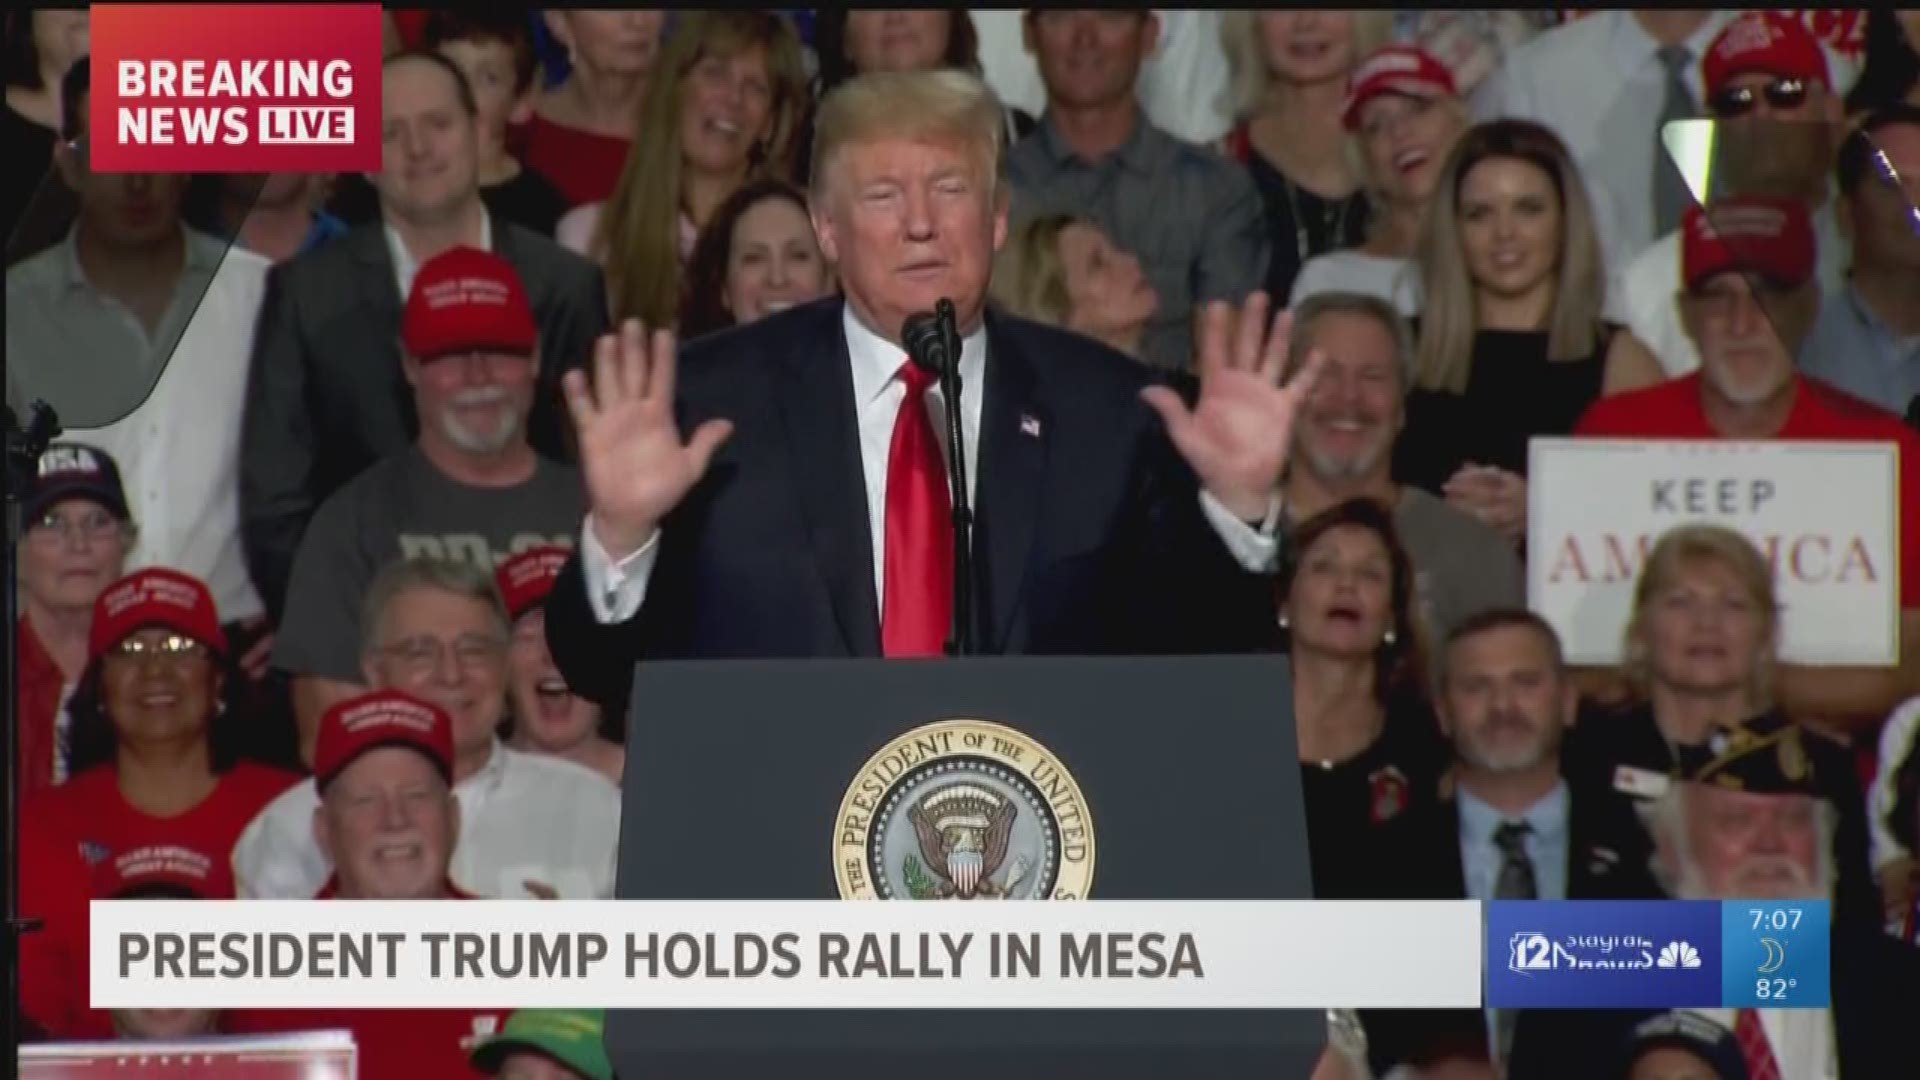 President Trump is in Mesa campaigning for Republican Senate nominee Martha McSally. During his speech Trump criticized the media.